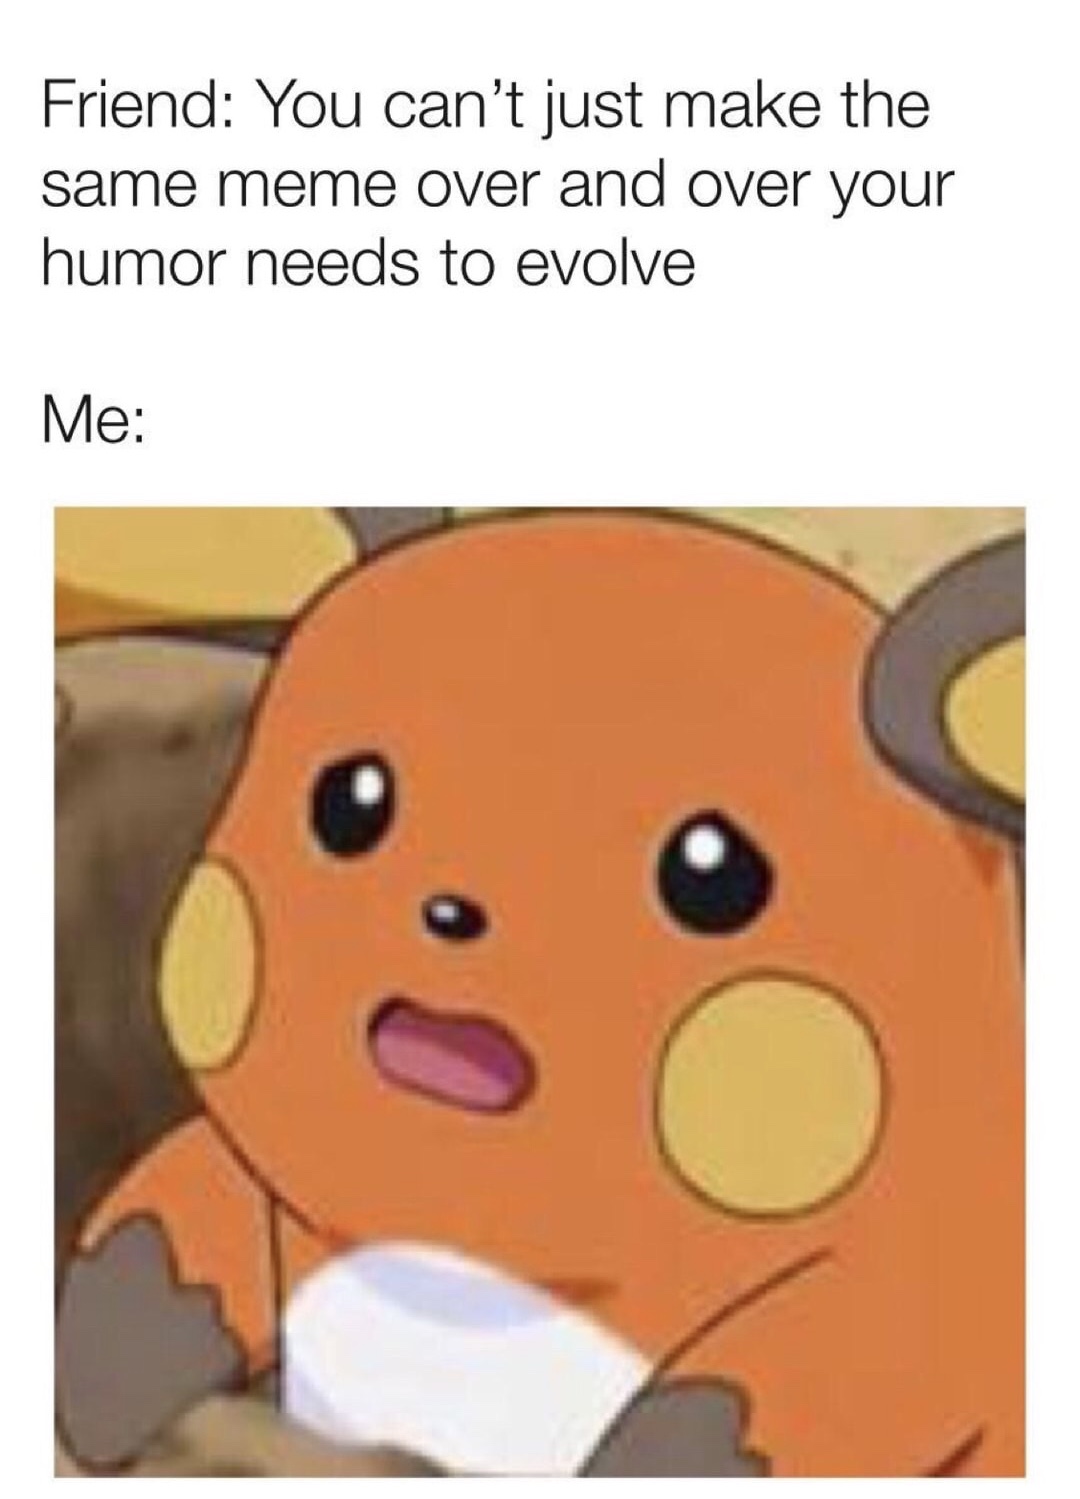 Pikachu meme about humor needing to evolve